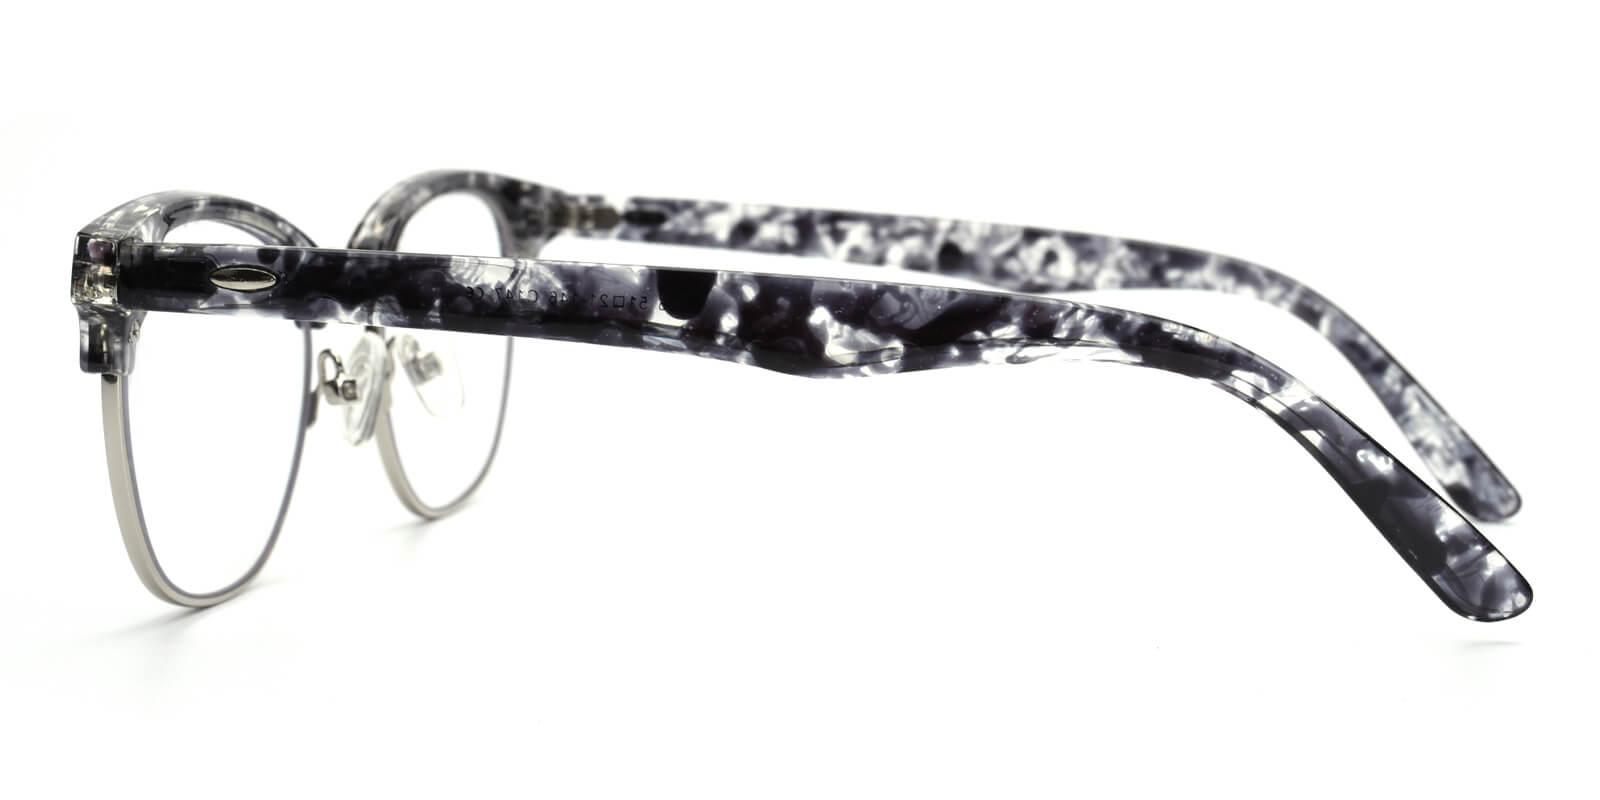 Ancient-Striped-Browline-Metal-Eyeglasses-detail